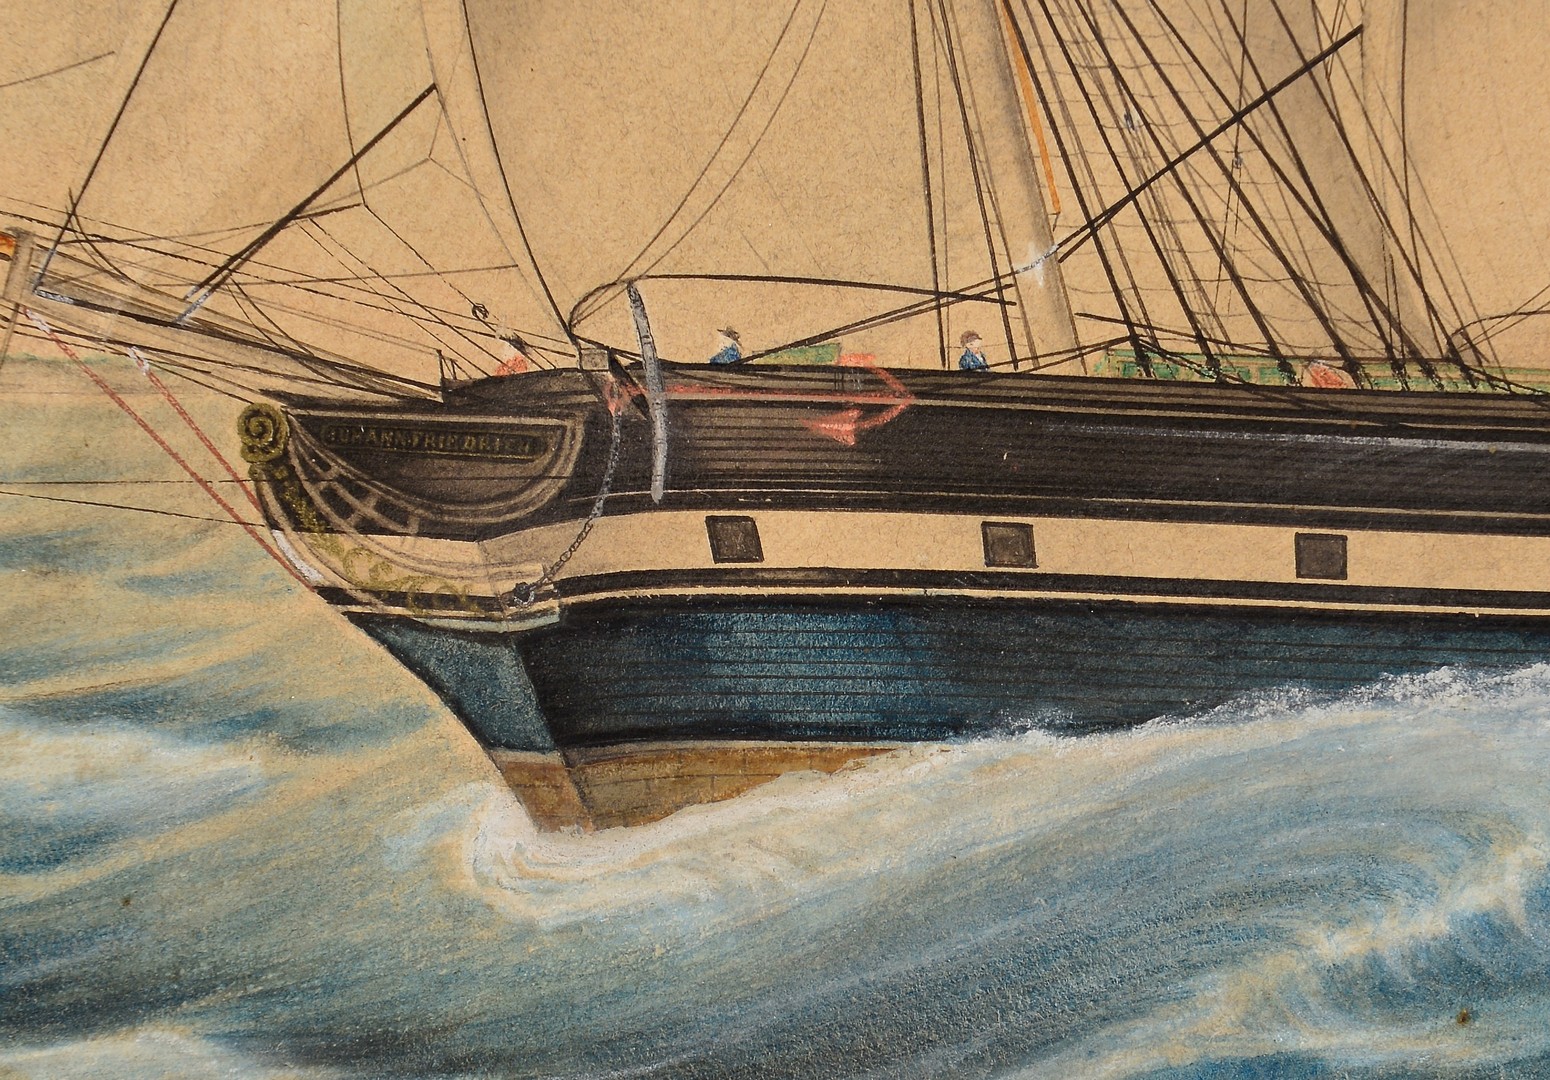 Lot 234: Ship watercolor, Lohann. Friedrich.